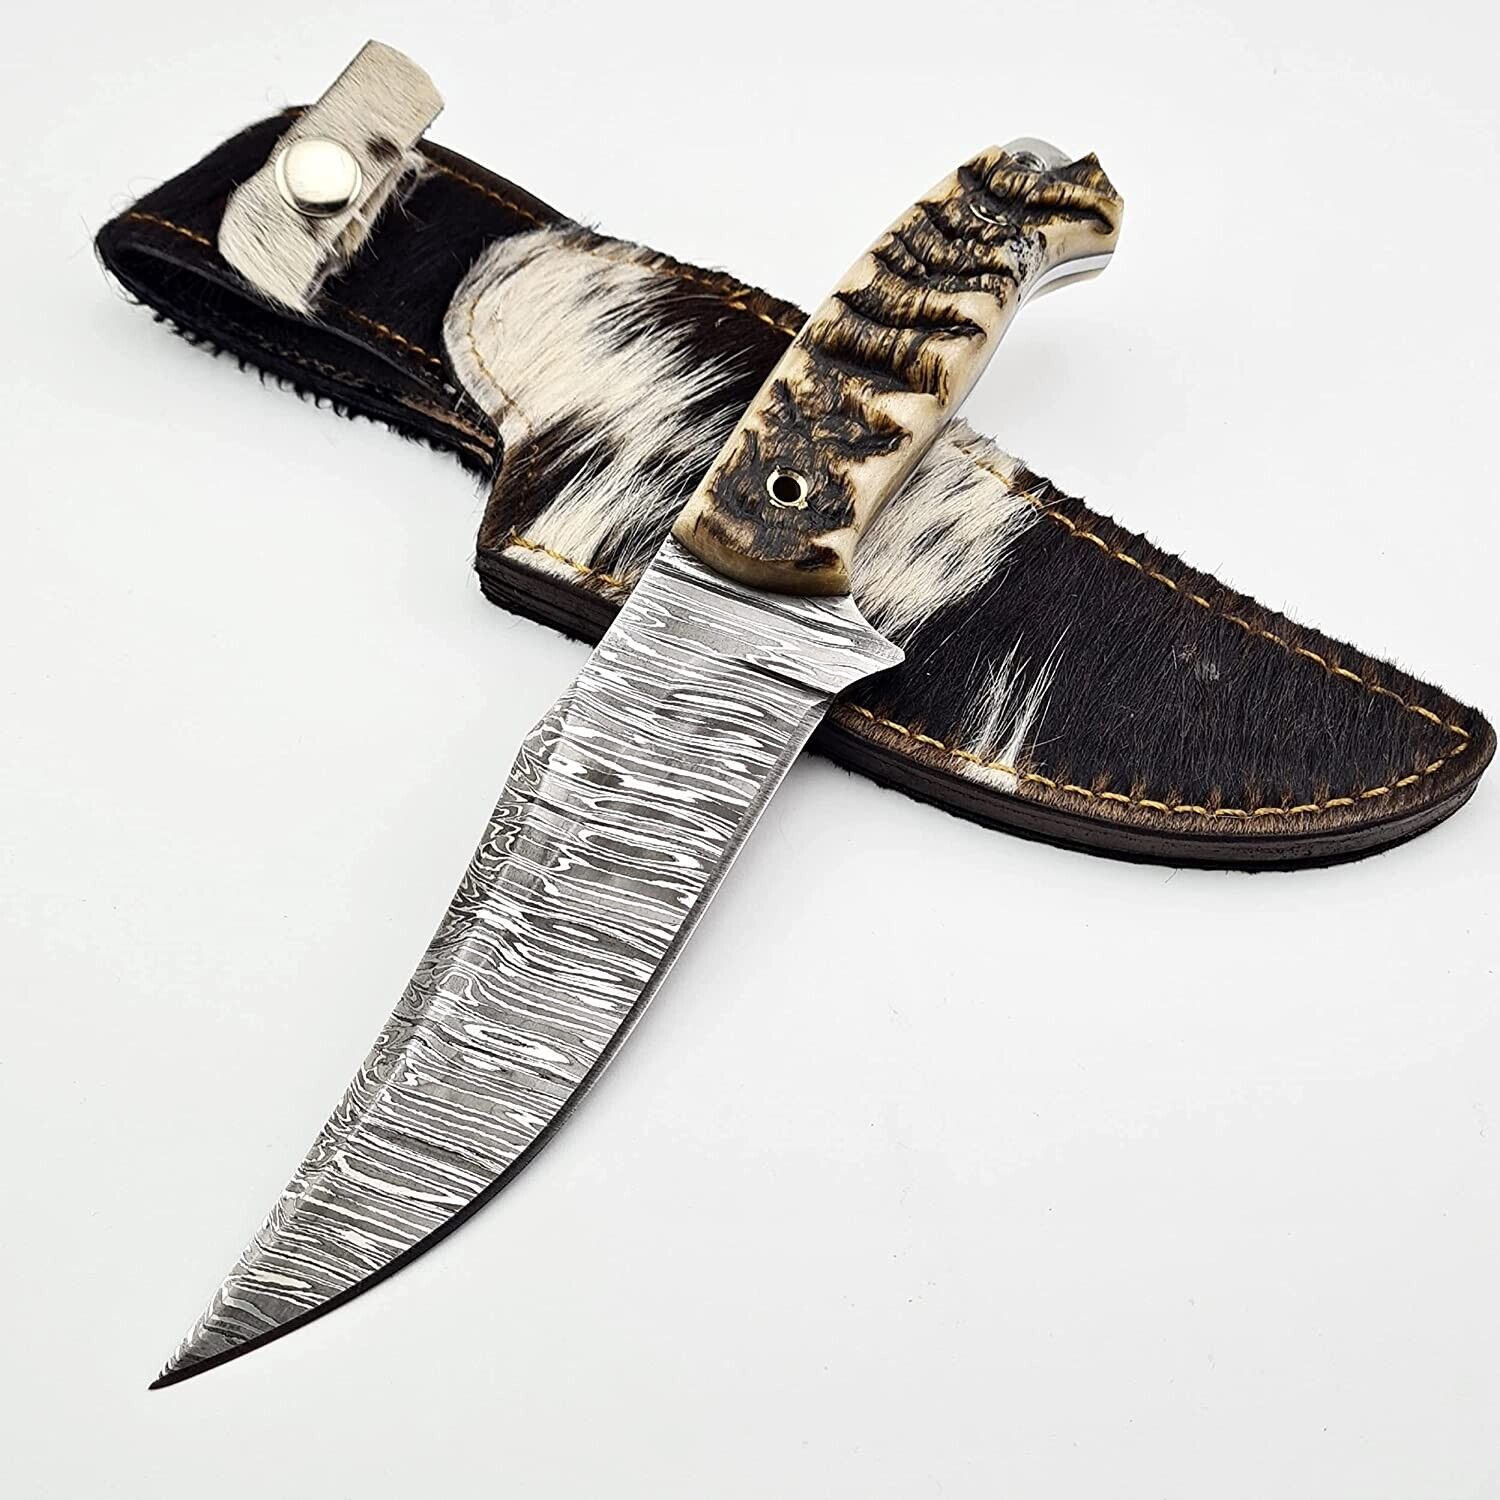 Handmade Damascus Steel With Horn Handle Knife